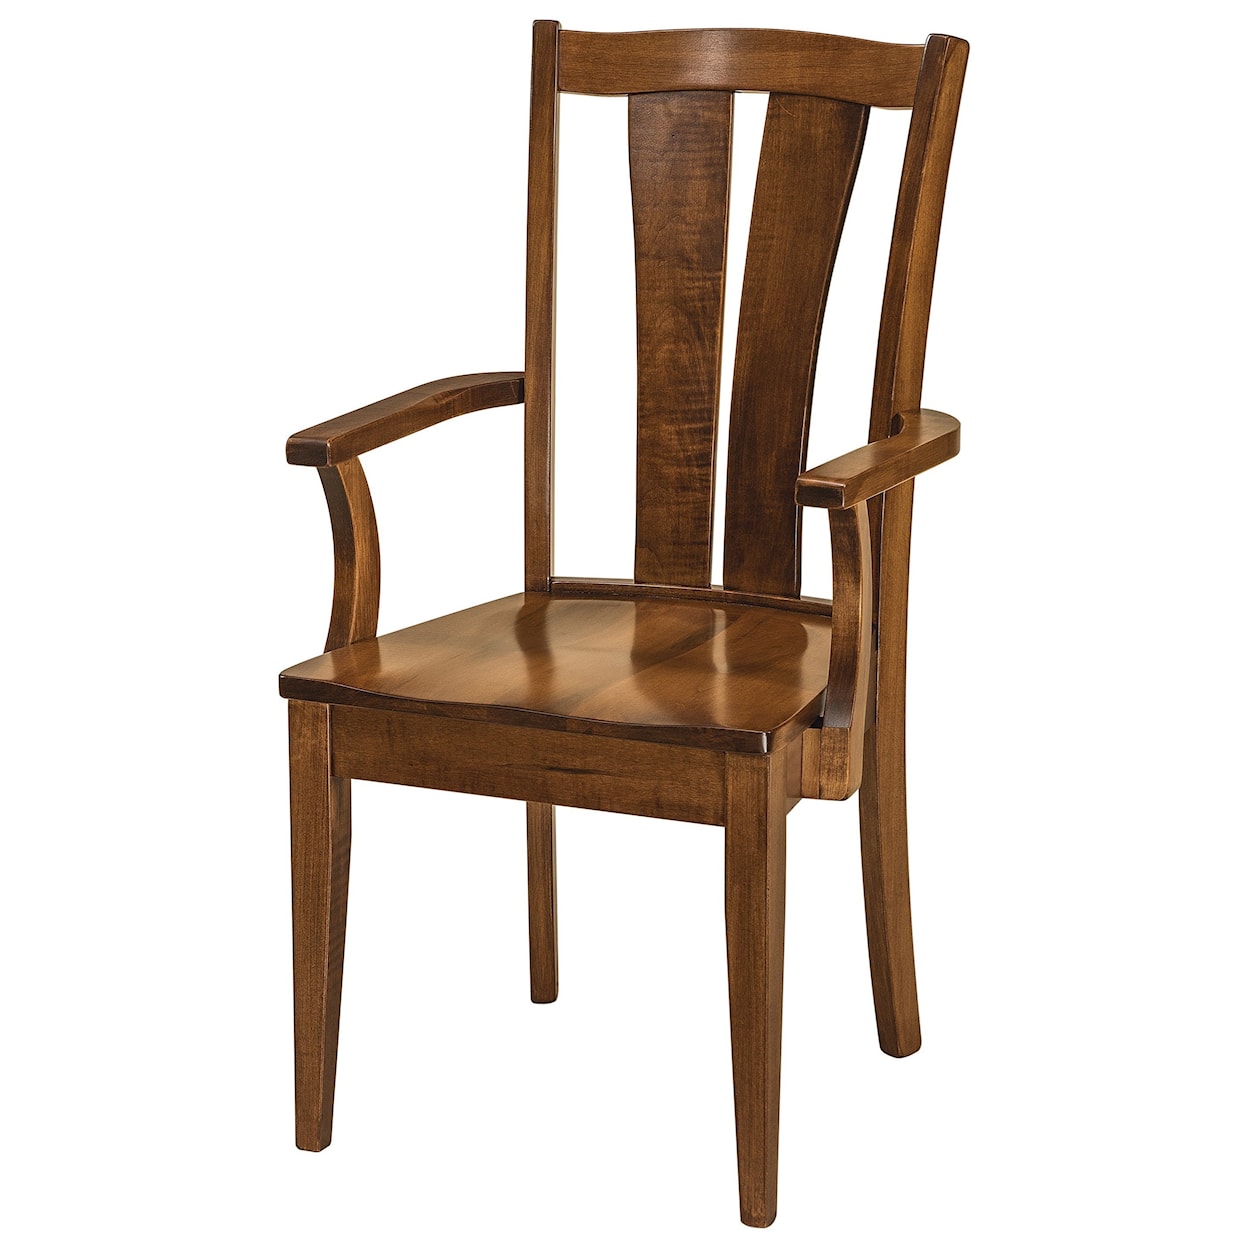 F&N Woodworking Brawley Arm Chair - Leather Seat